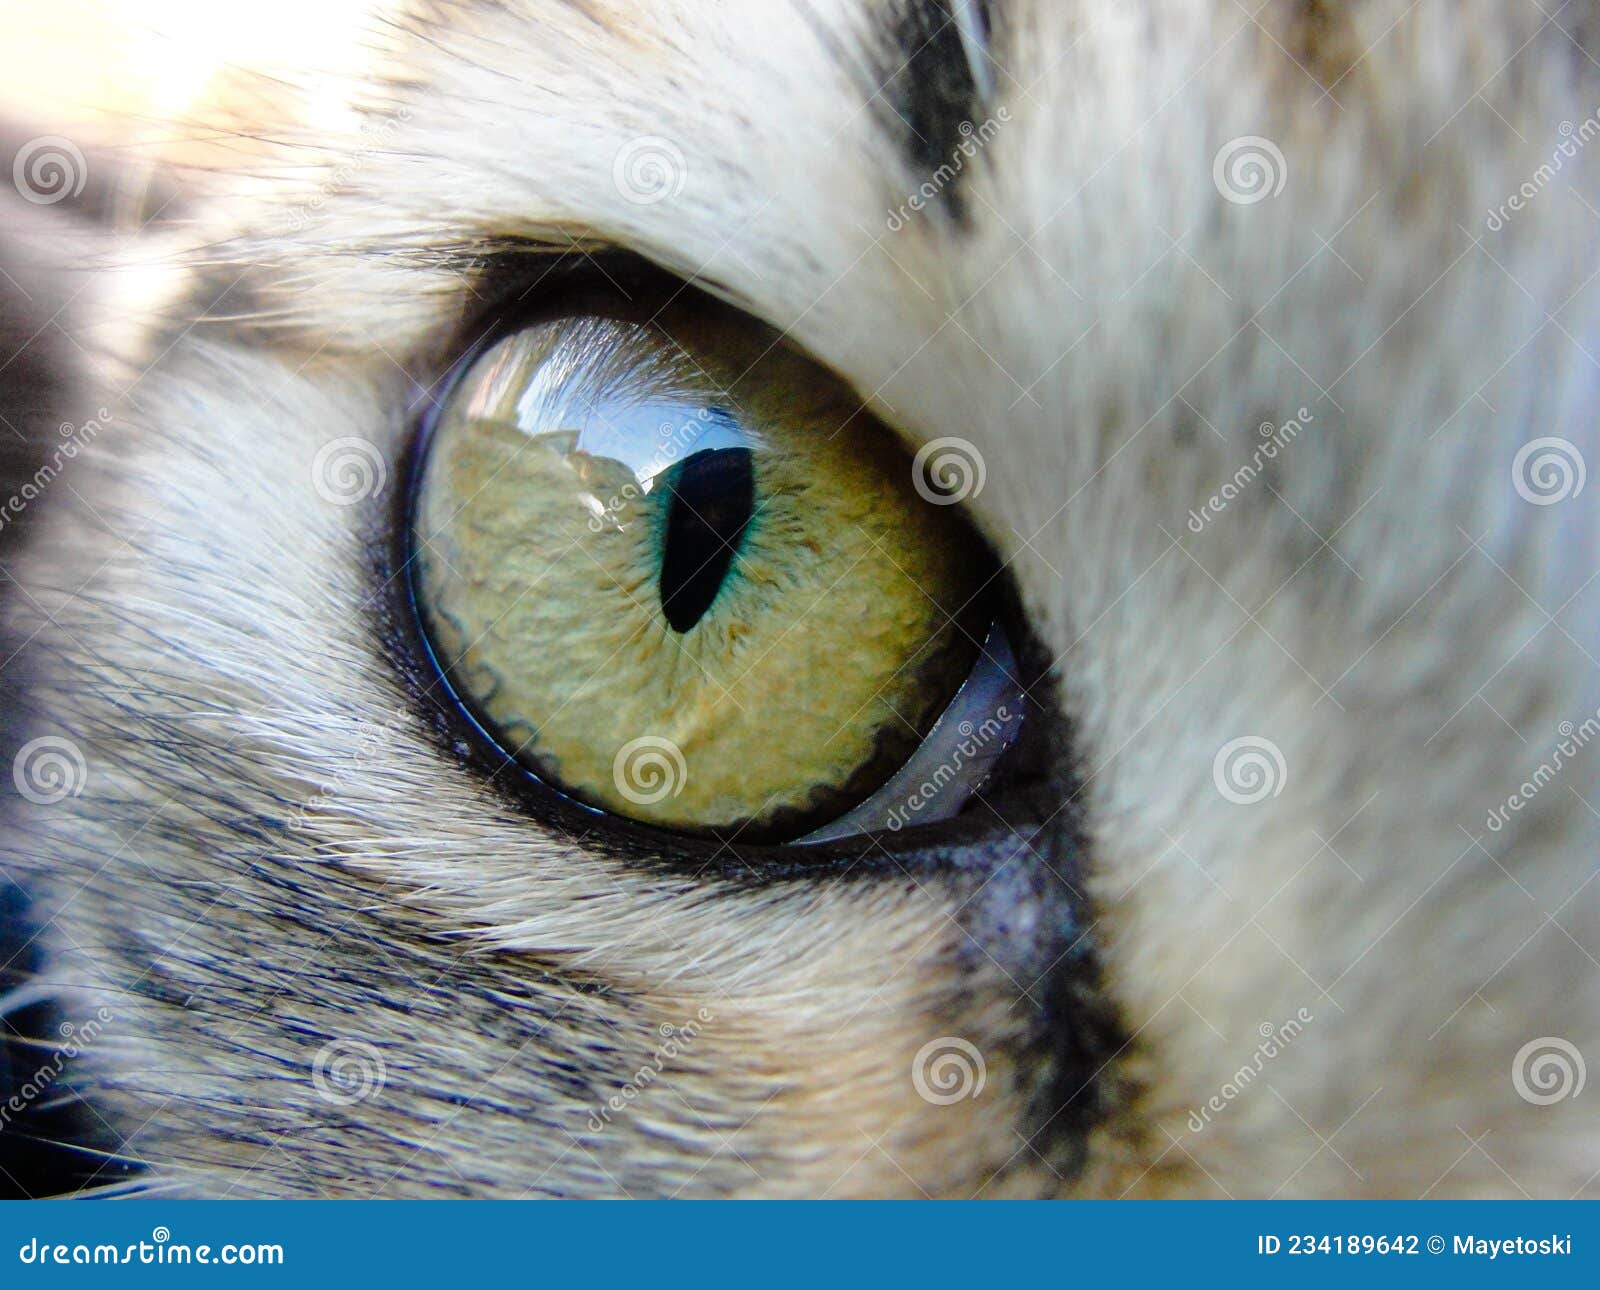 hairy cat close up on eye